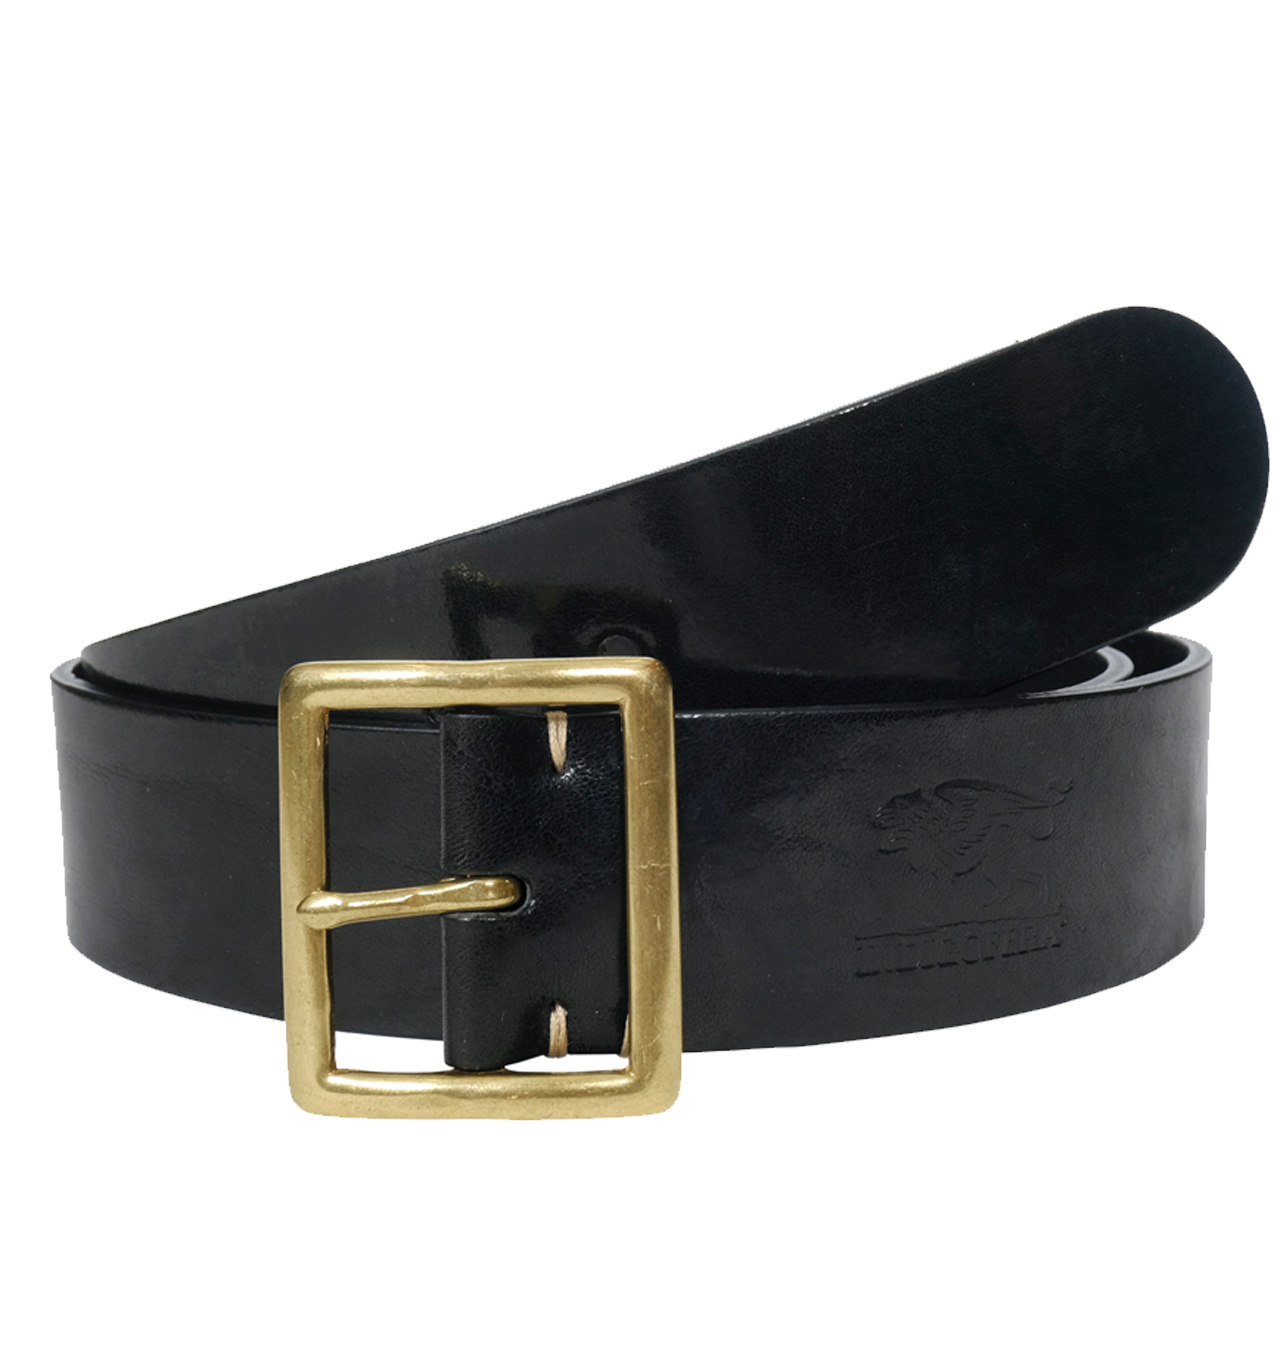 Indigofera---Levon-Leather-Belt---Black-1